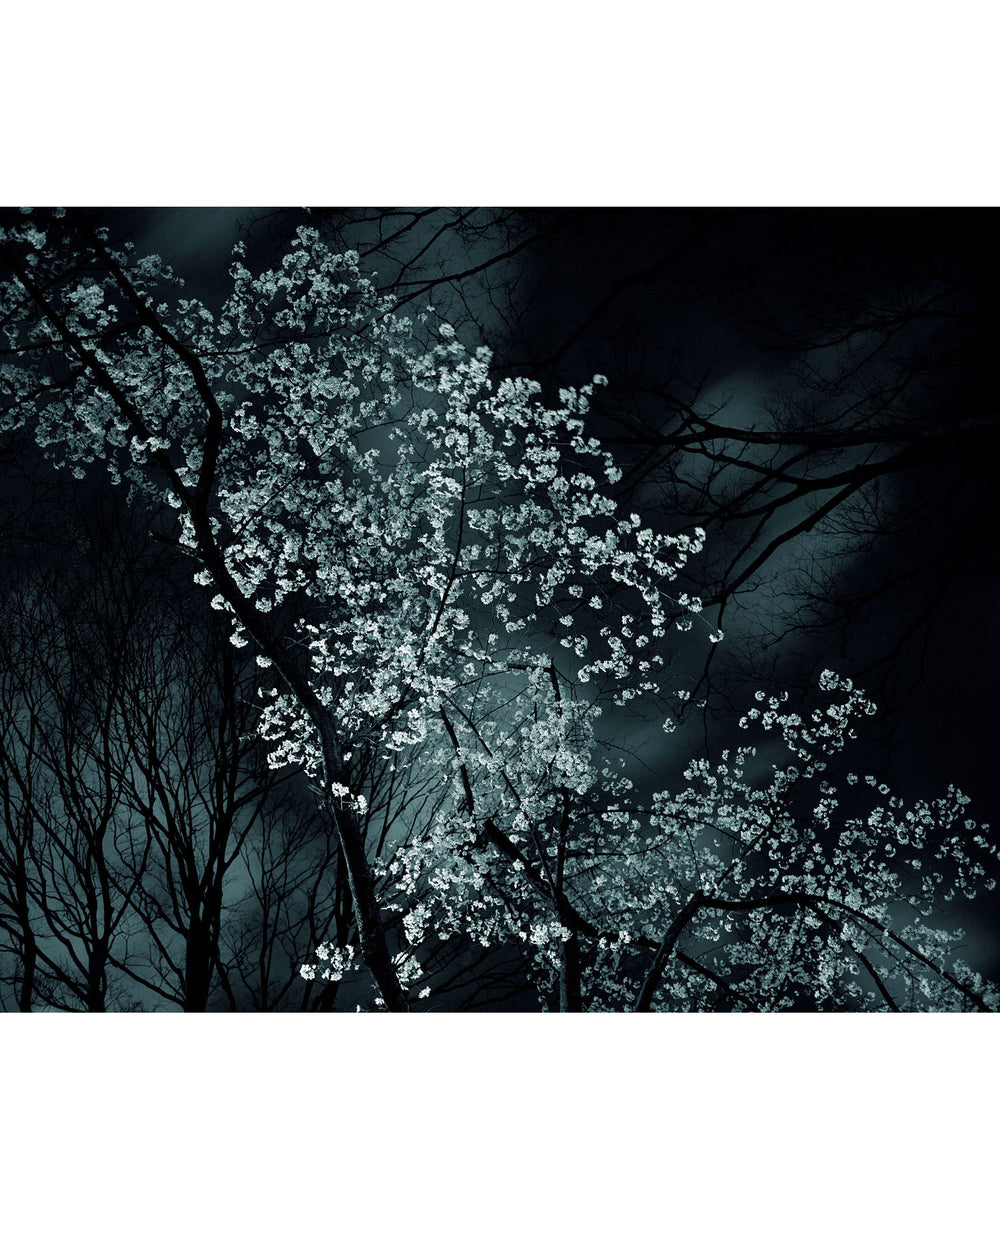 Night Flower (Tokyo IV), 2007